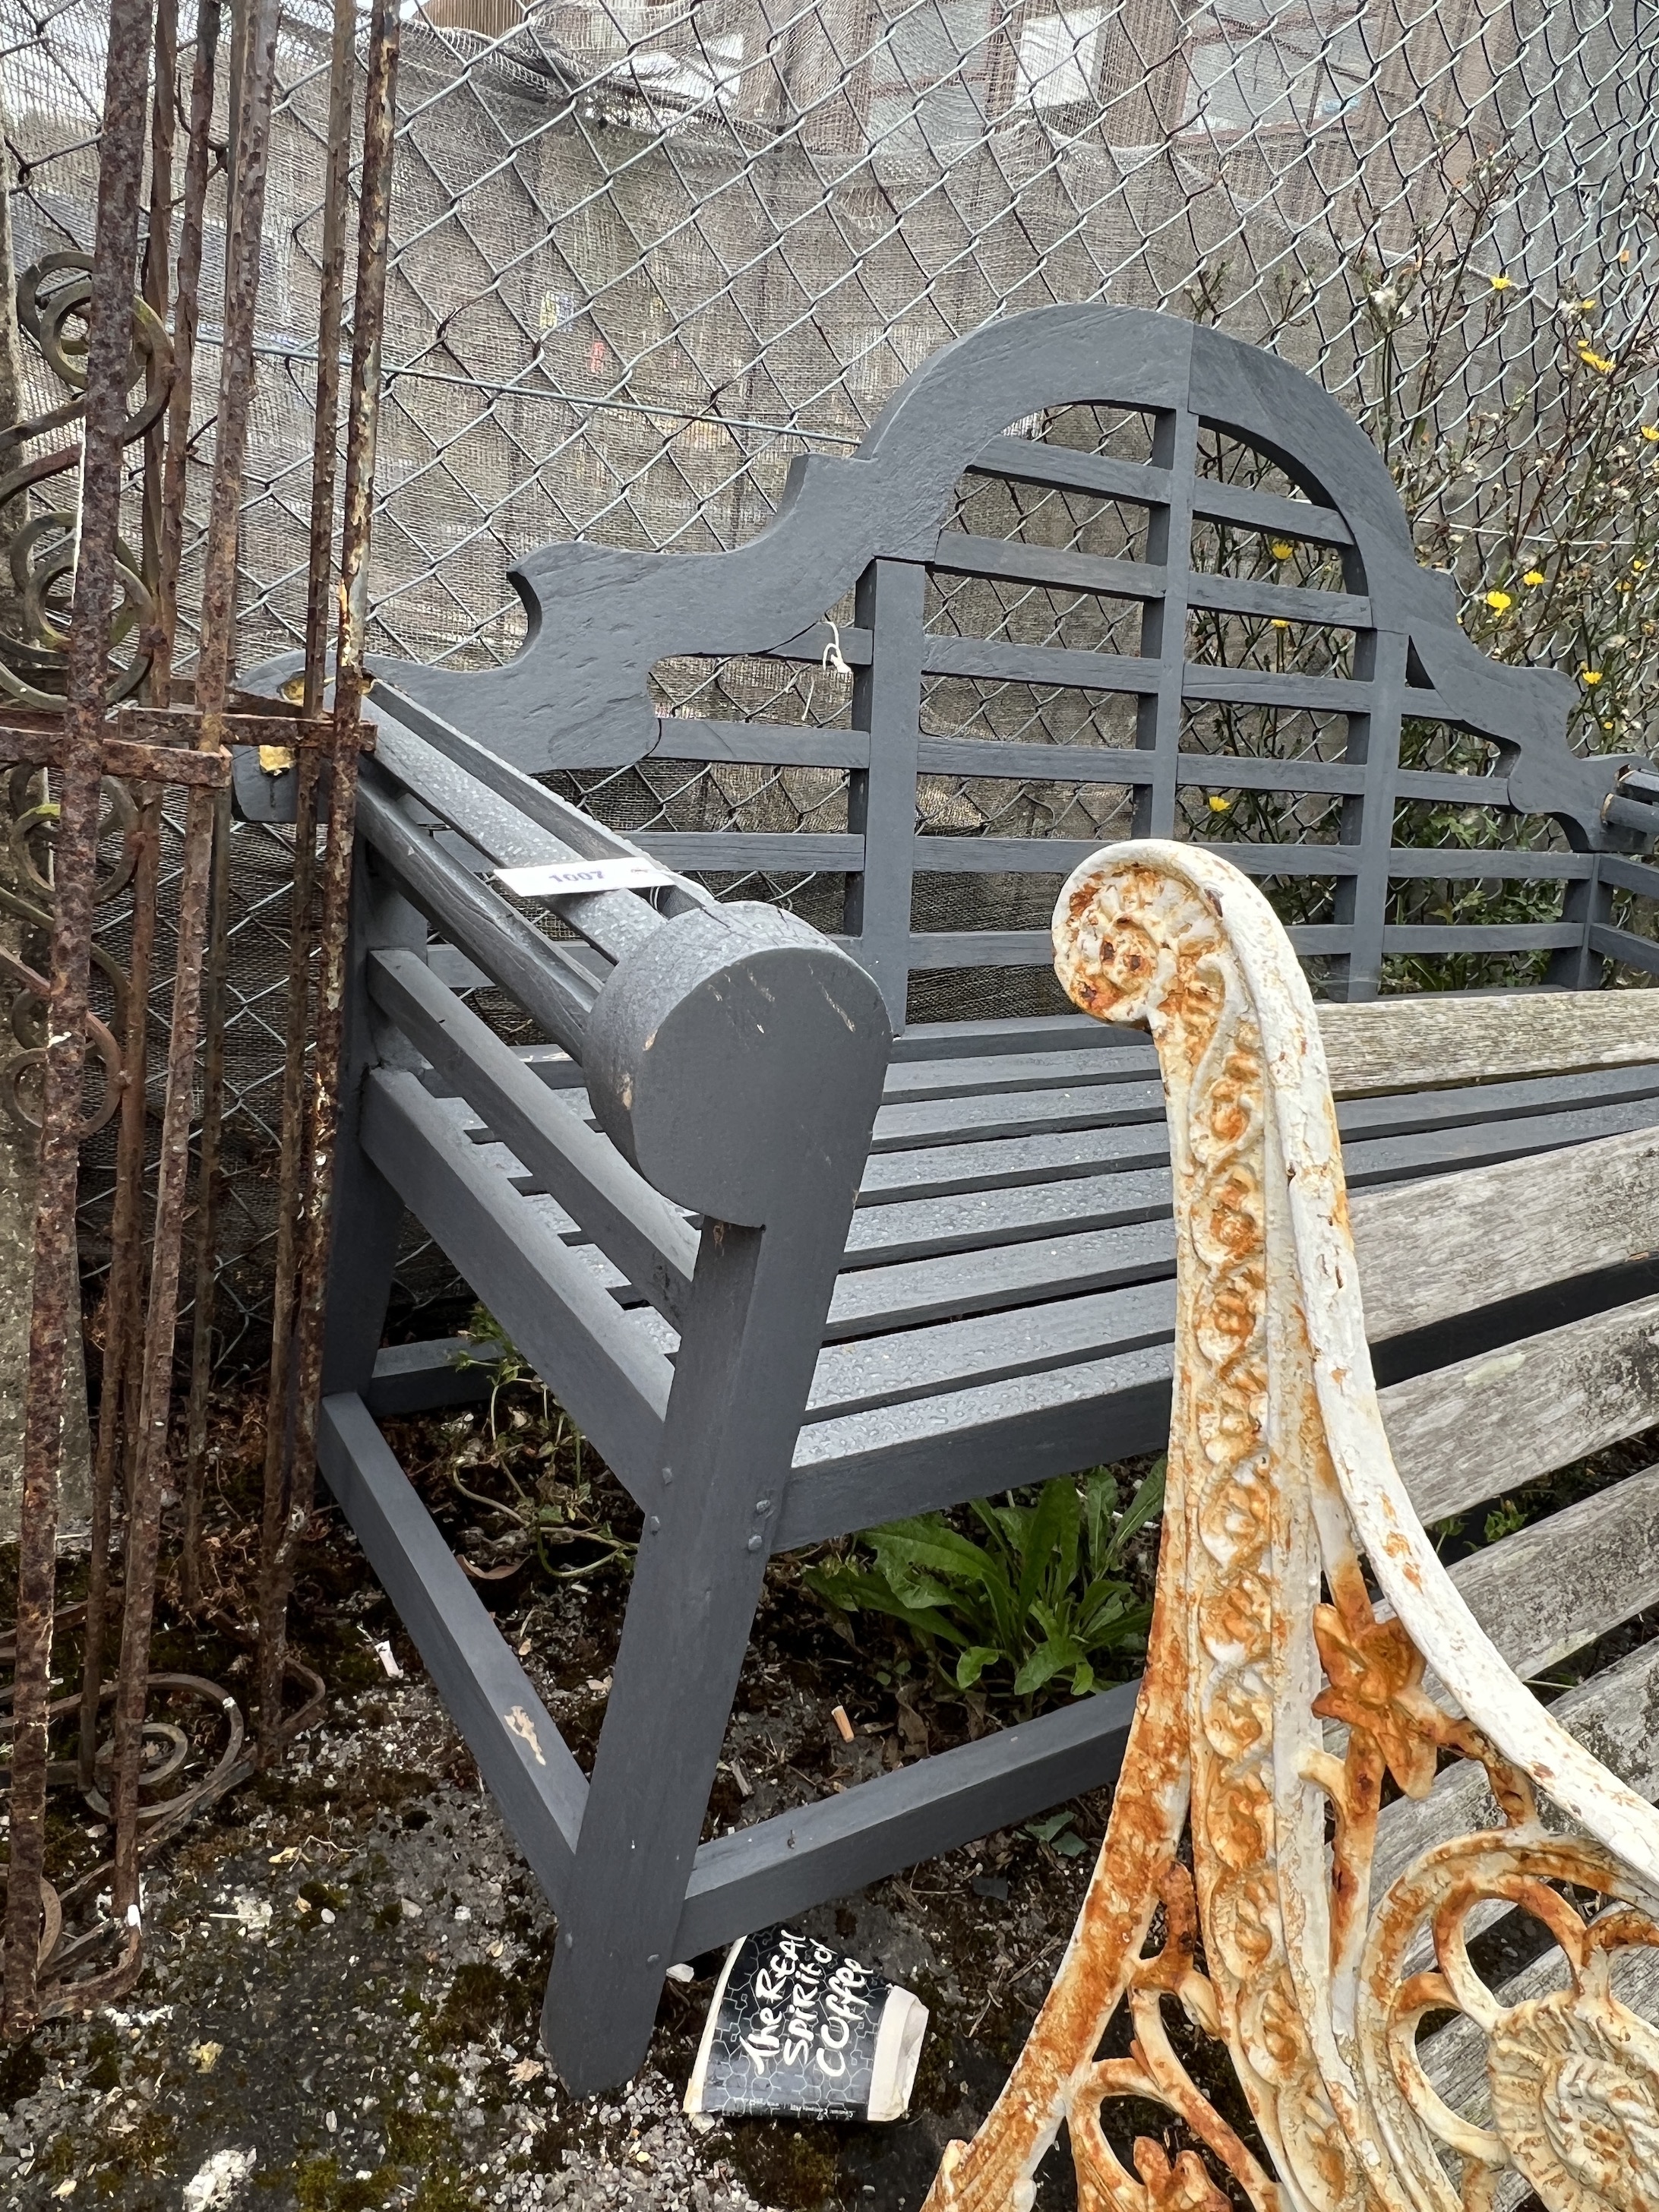 A Lutyens style painted teak garden bench (a.f.), length 160cm, width 58cm, height 105cm